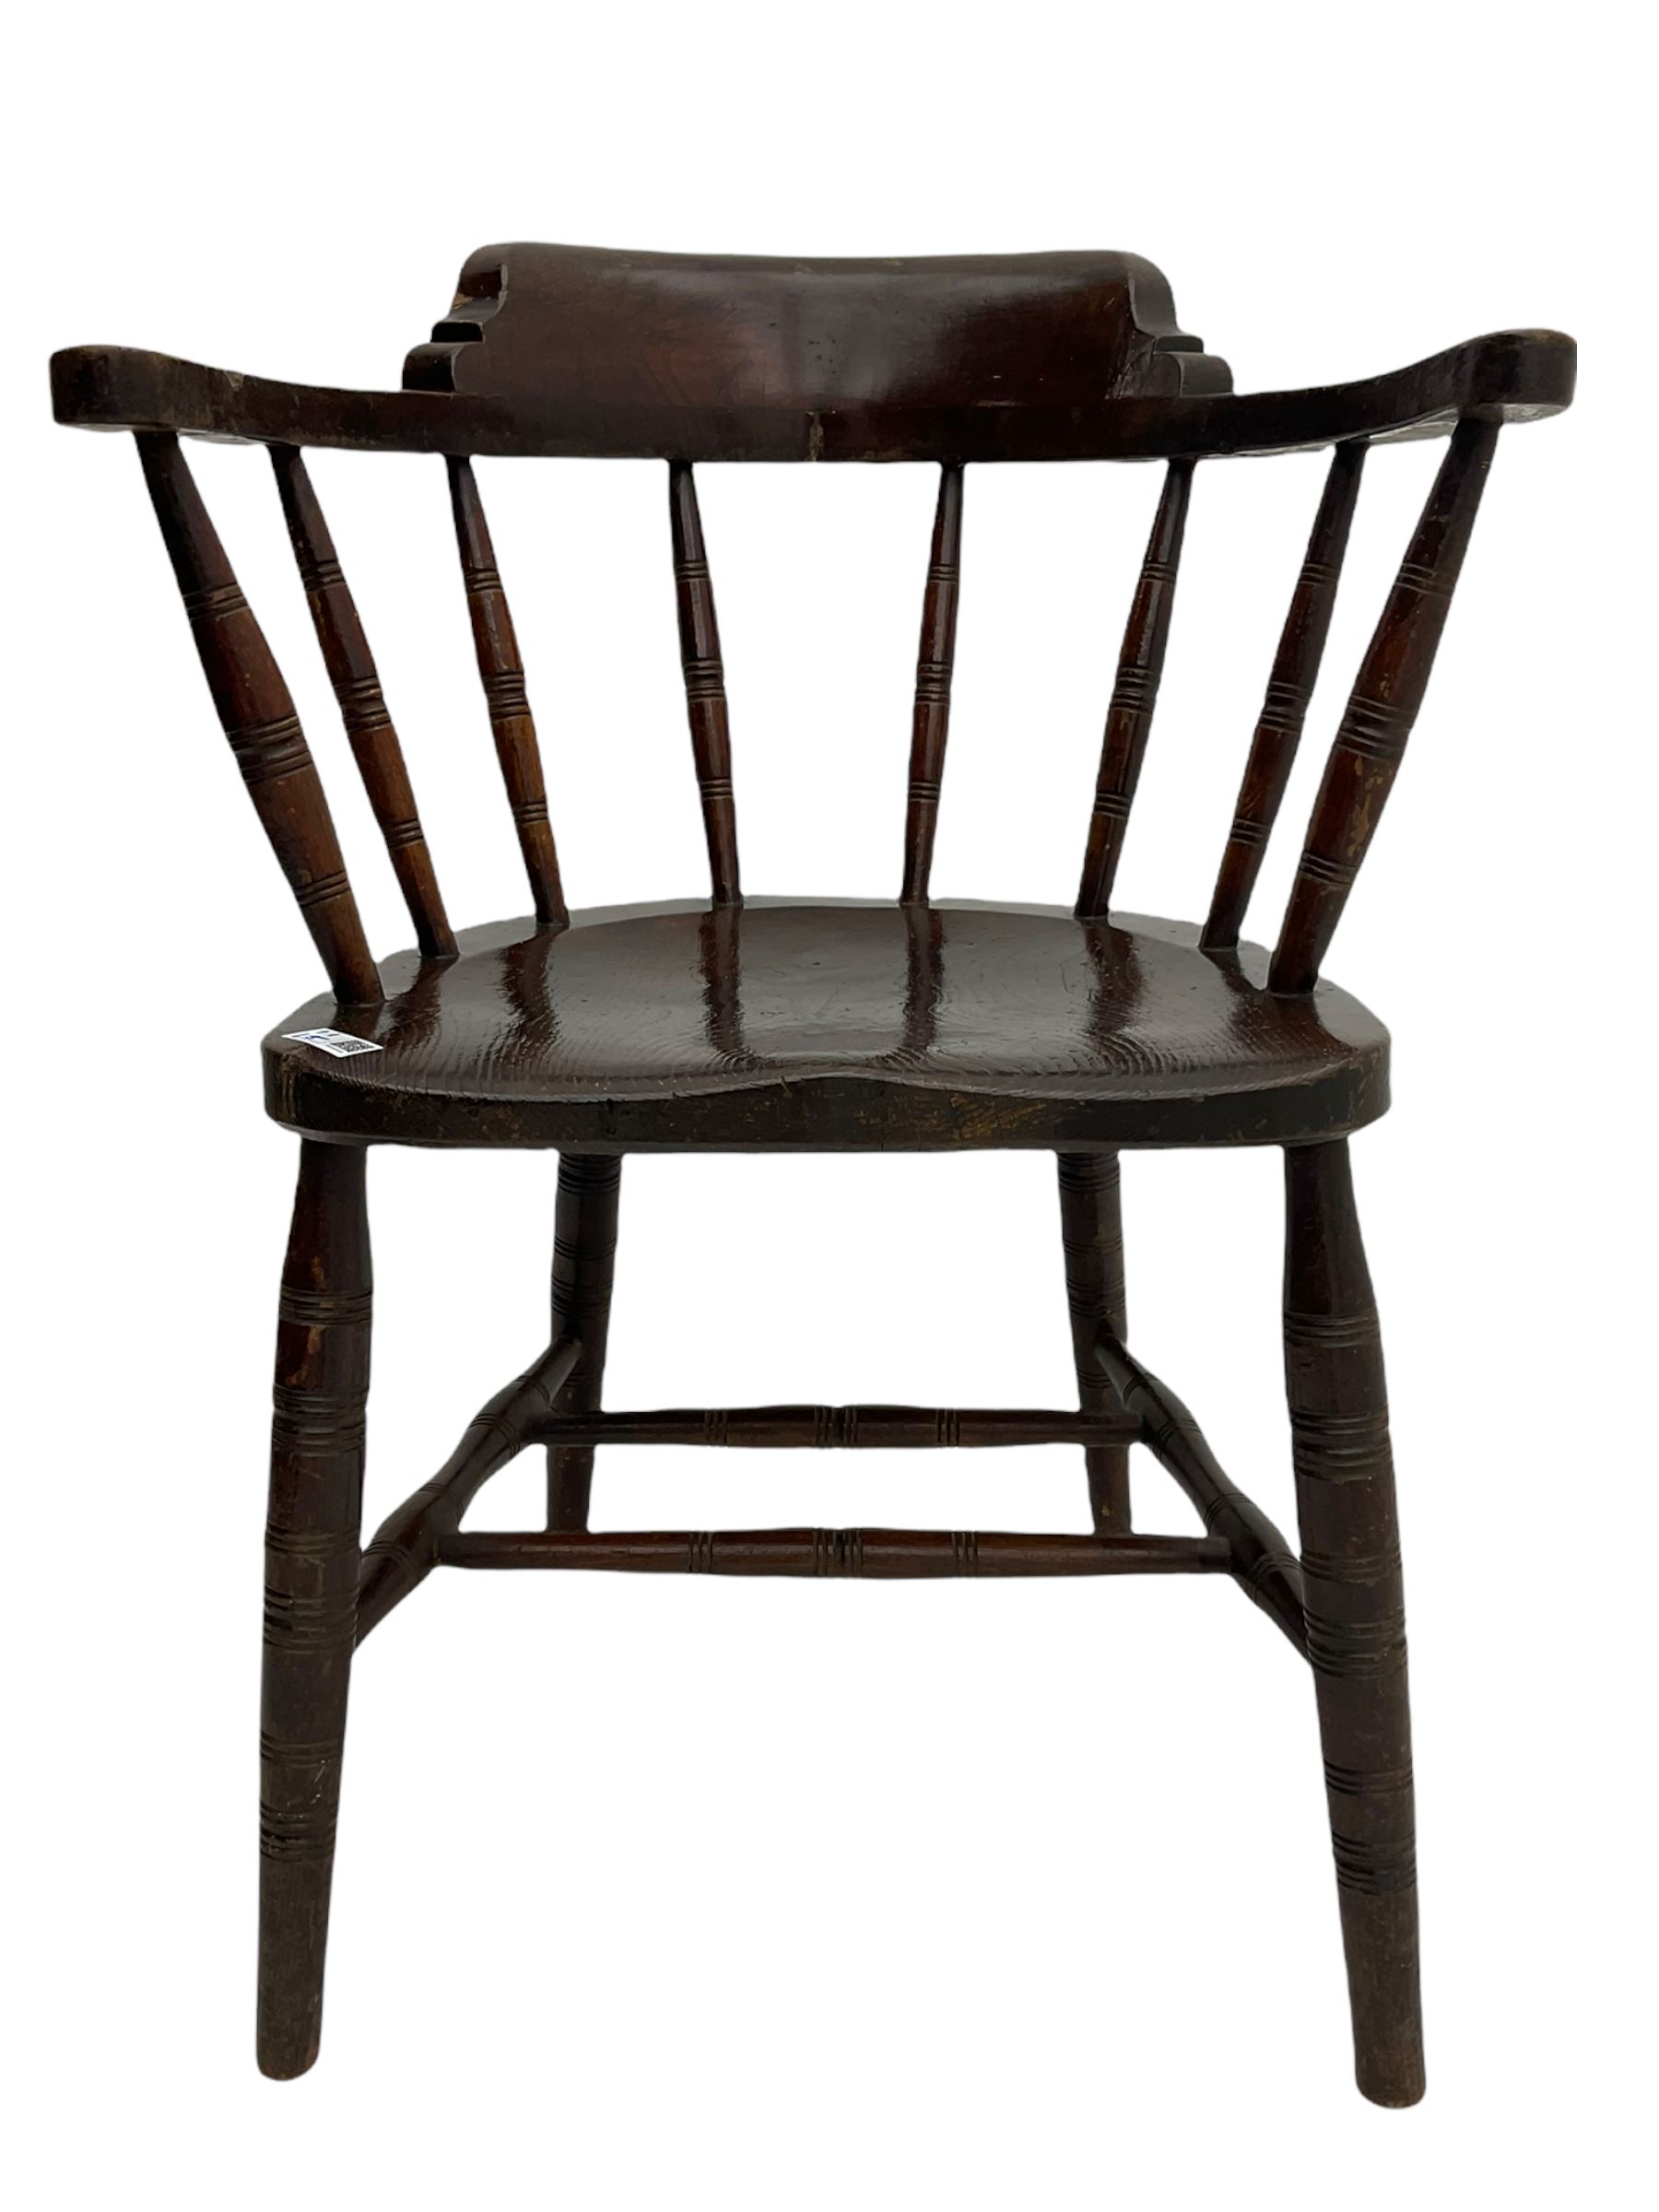 19th century beech Windsor armchair (W60cm) - Image 3 of 8